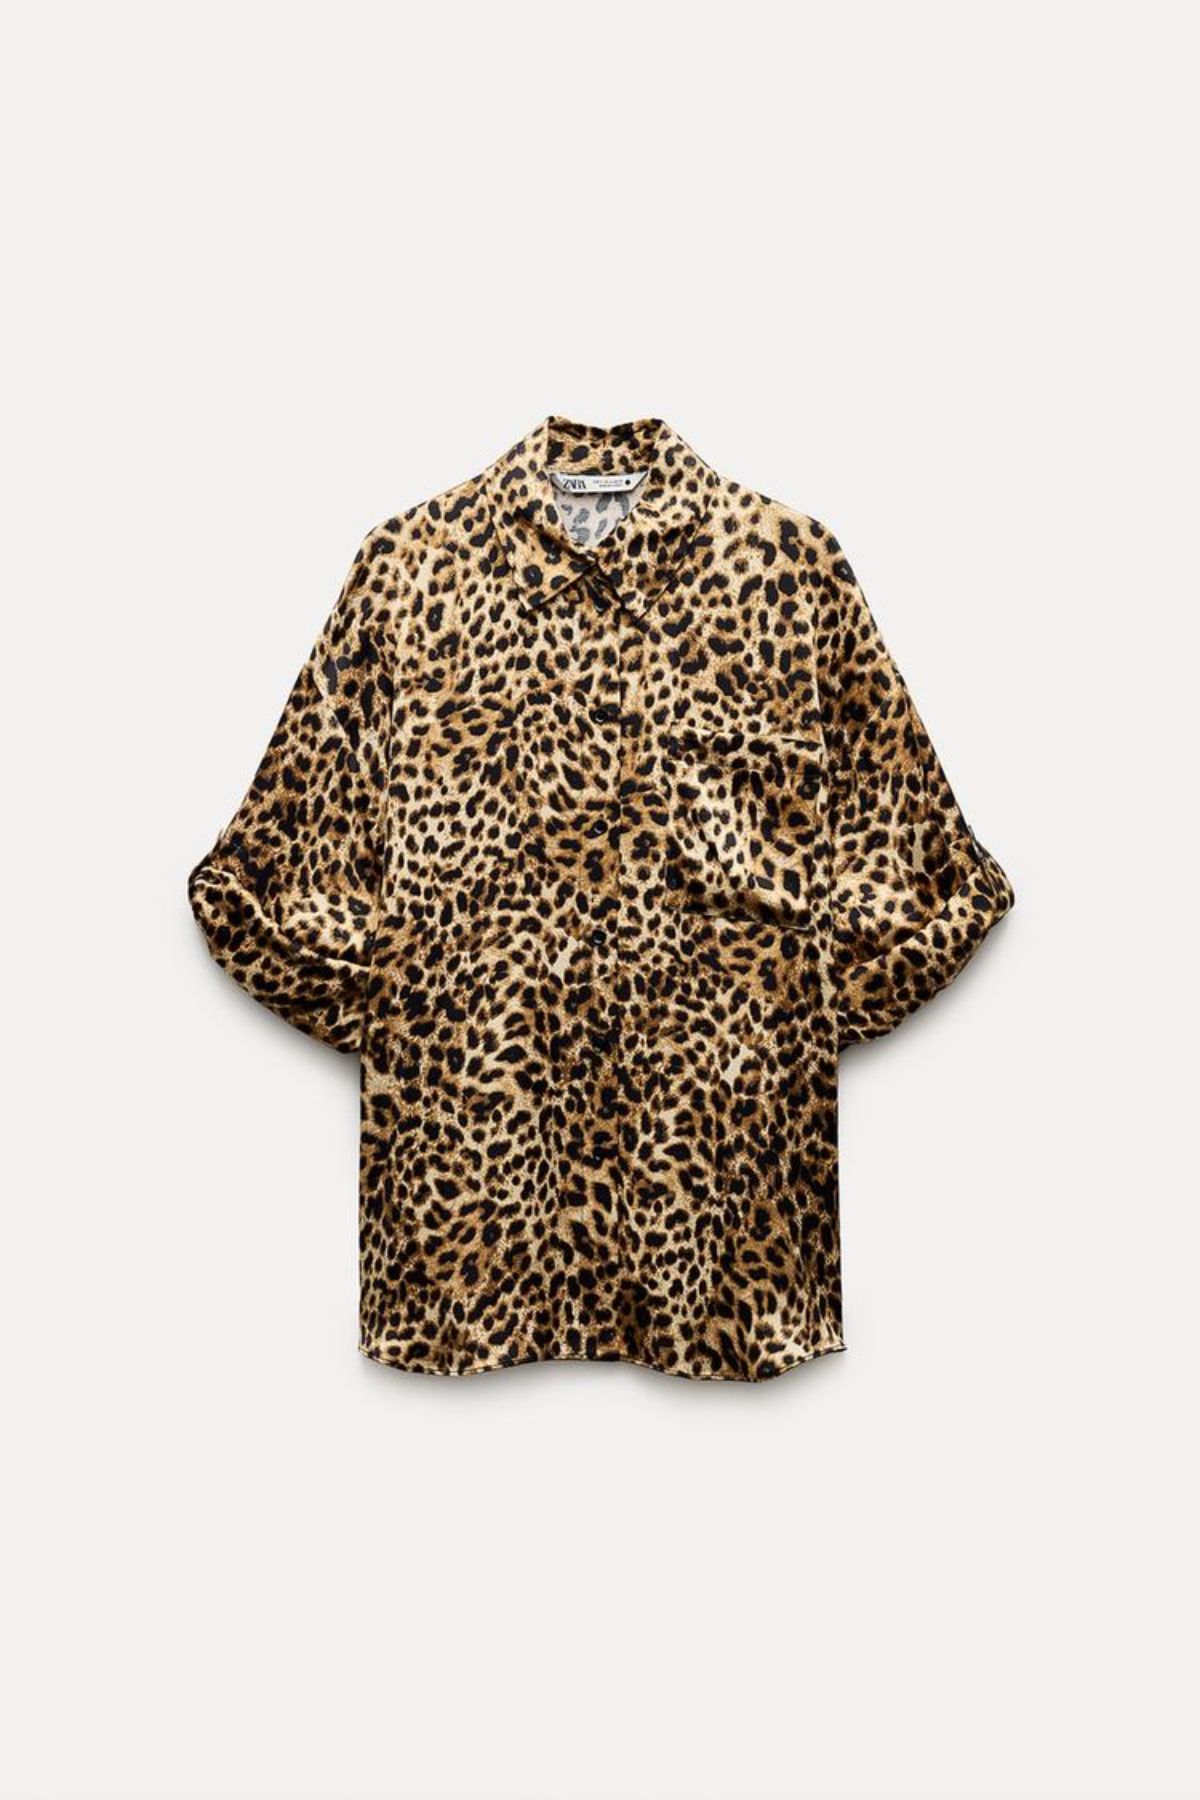 Camisa animal print de Zara